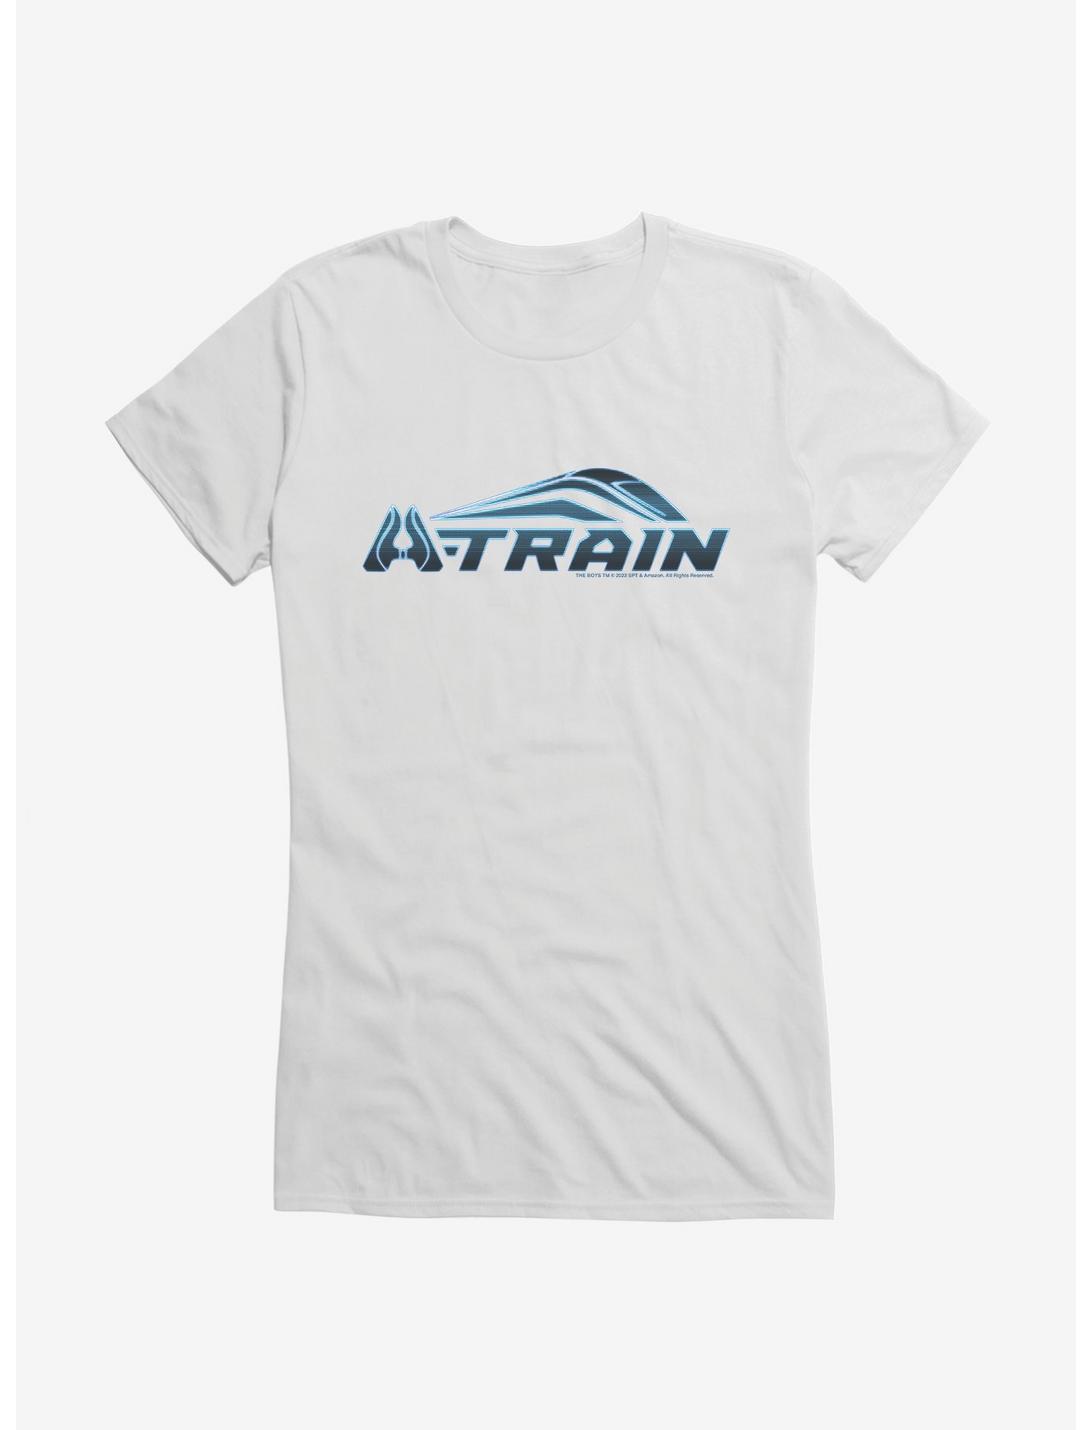 The Boys A-Train Logo Girls T-Shirt, , hi-res